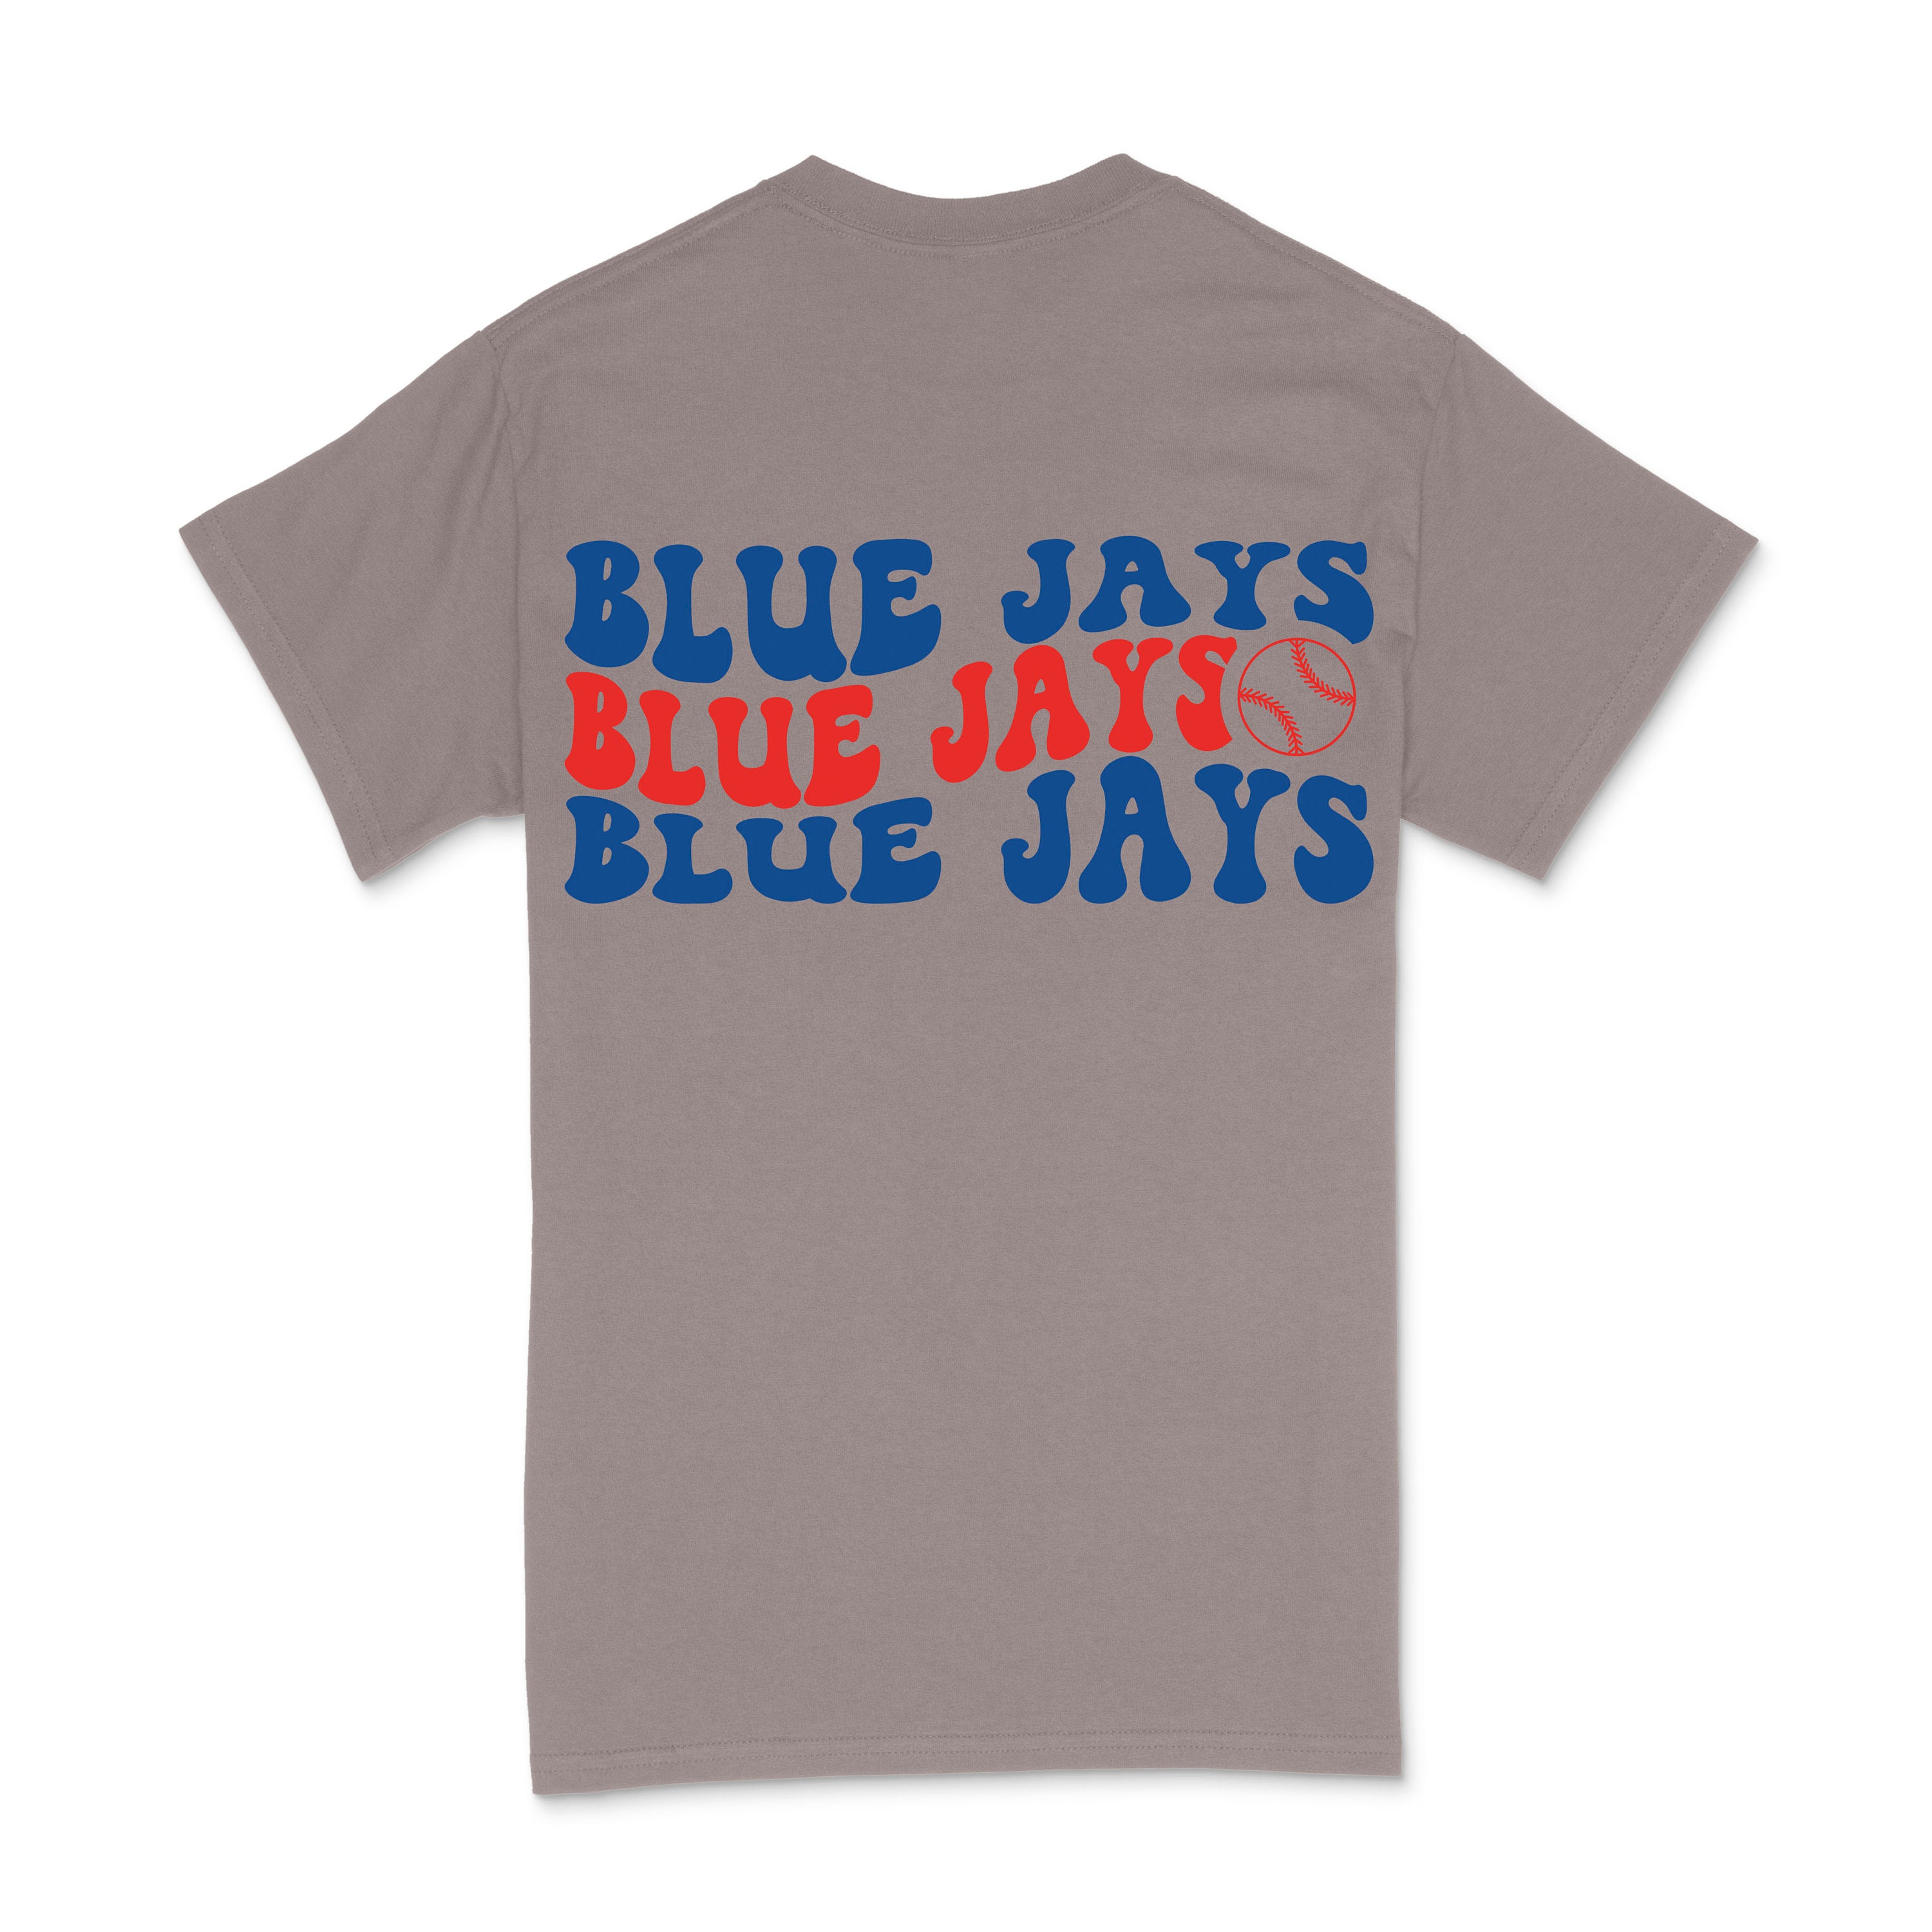 BlueJays #Toronto #Blue #Jays #TorontoBlueJays #logo svg pack-  #baseballteam, #baseballleague, #baseball #cutfi…